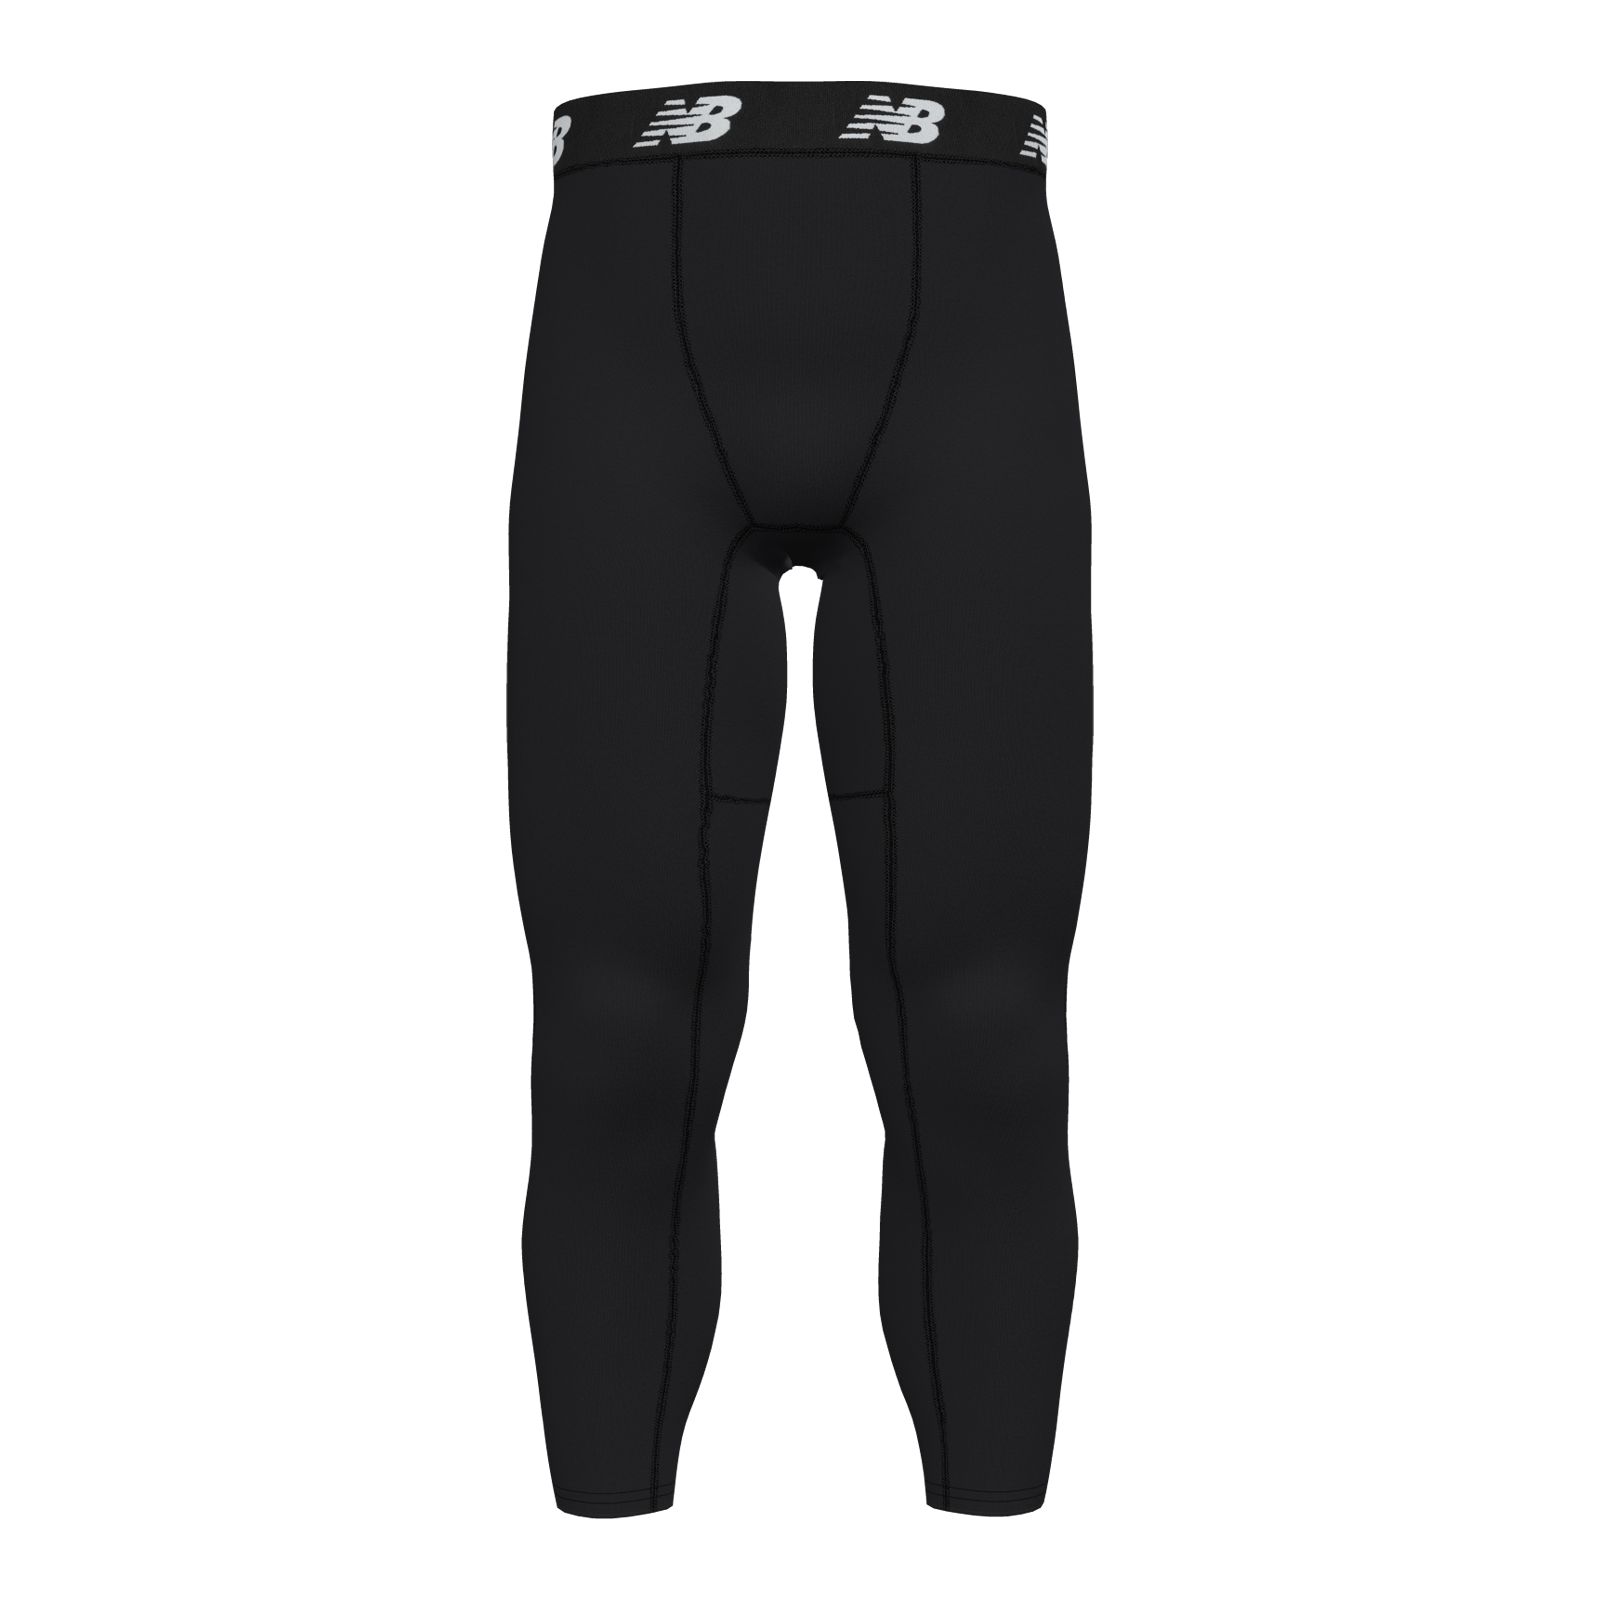 Leggings Quick Dry Football Pants Compression Pants Sweat Sports